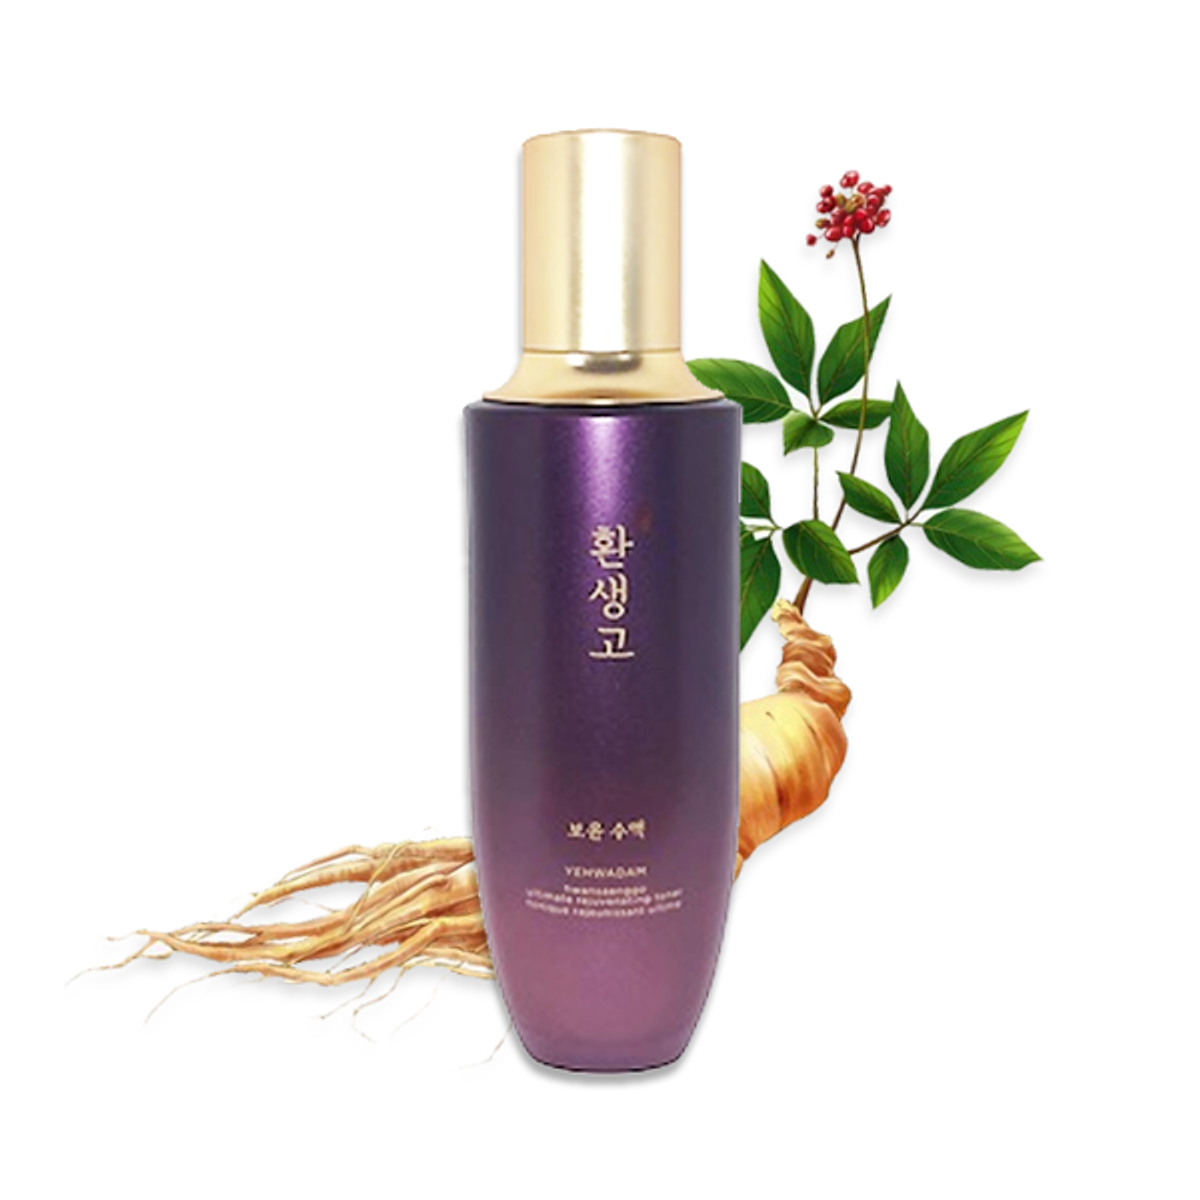 gift-sua-duong-tre-hoa-da-yehwadam-hwansaenggo-ultimate-rejuvenating-emulsion-140ml-1